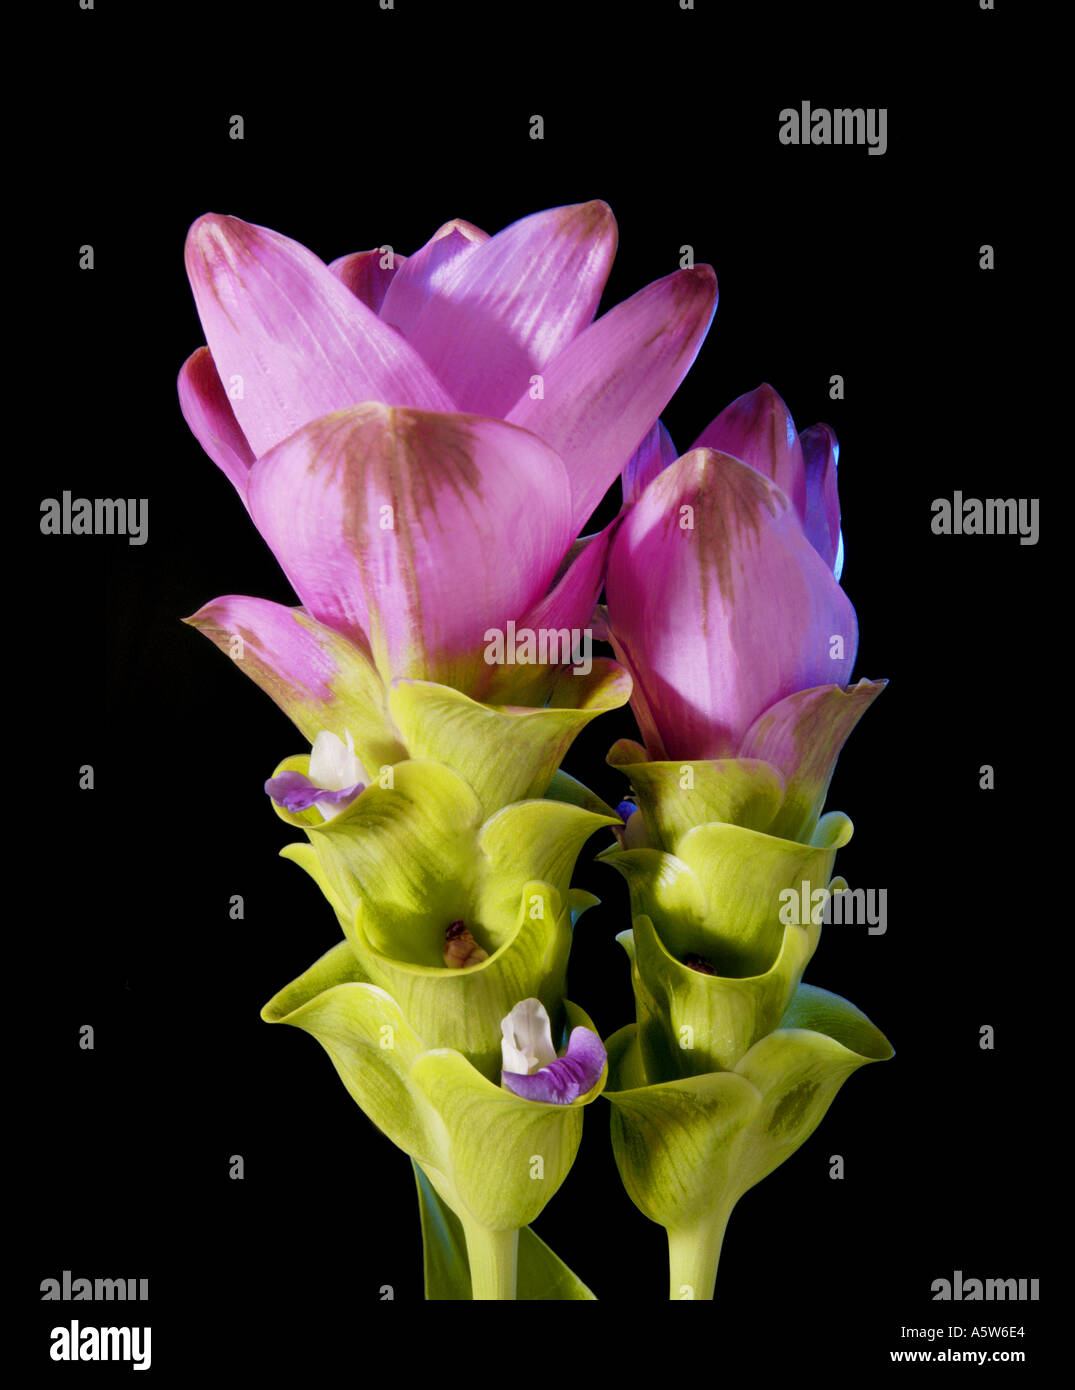 Usine de curcuma curcuma alismatifolia feuilles fleurs de tulipe de Thaïlande sur fond sombre noir Banque D'Images